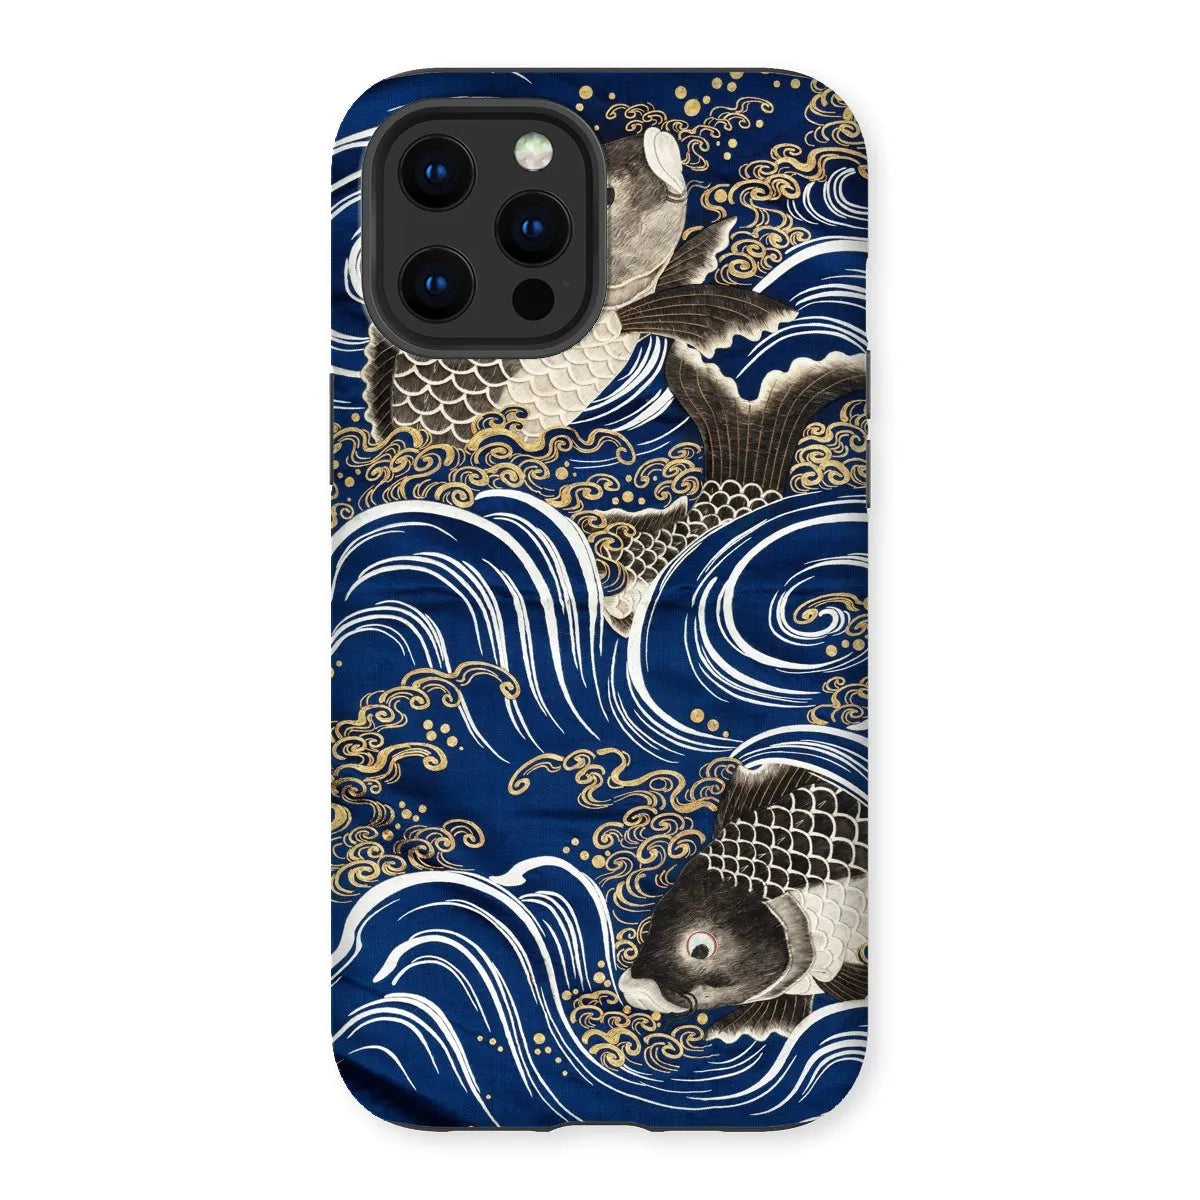 Fukusa And Carp - Japanese Meiji Period Art Phone Case - Iphone 12 Pro Max / Matte - Mobile Phone Cases - Aesthetic Art